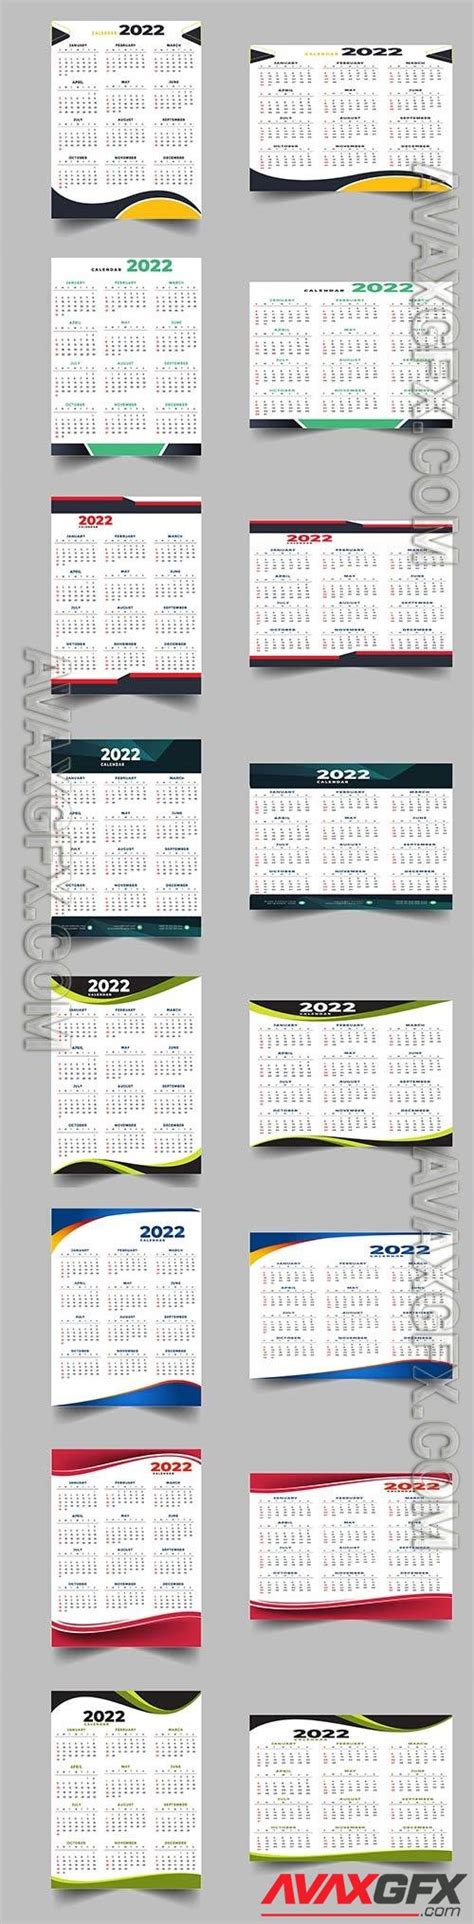 2022 Calendar Design Template Premium Vector Avaxgfx All Downloads